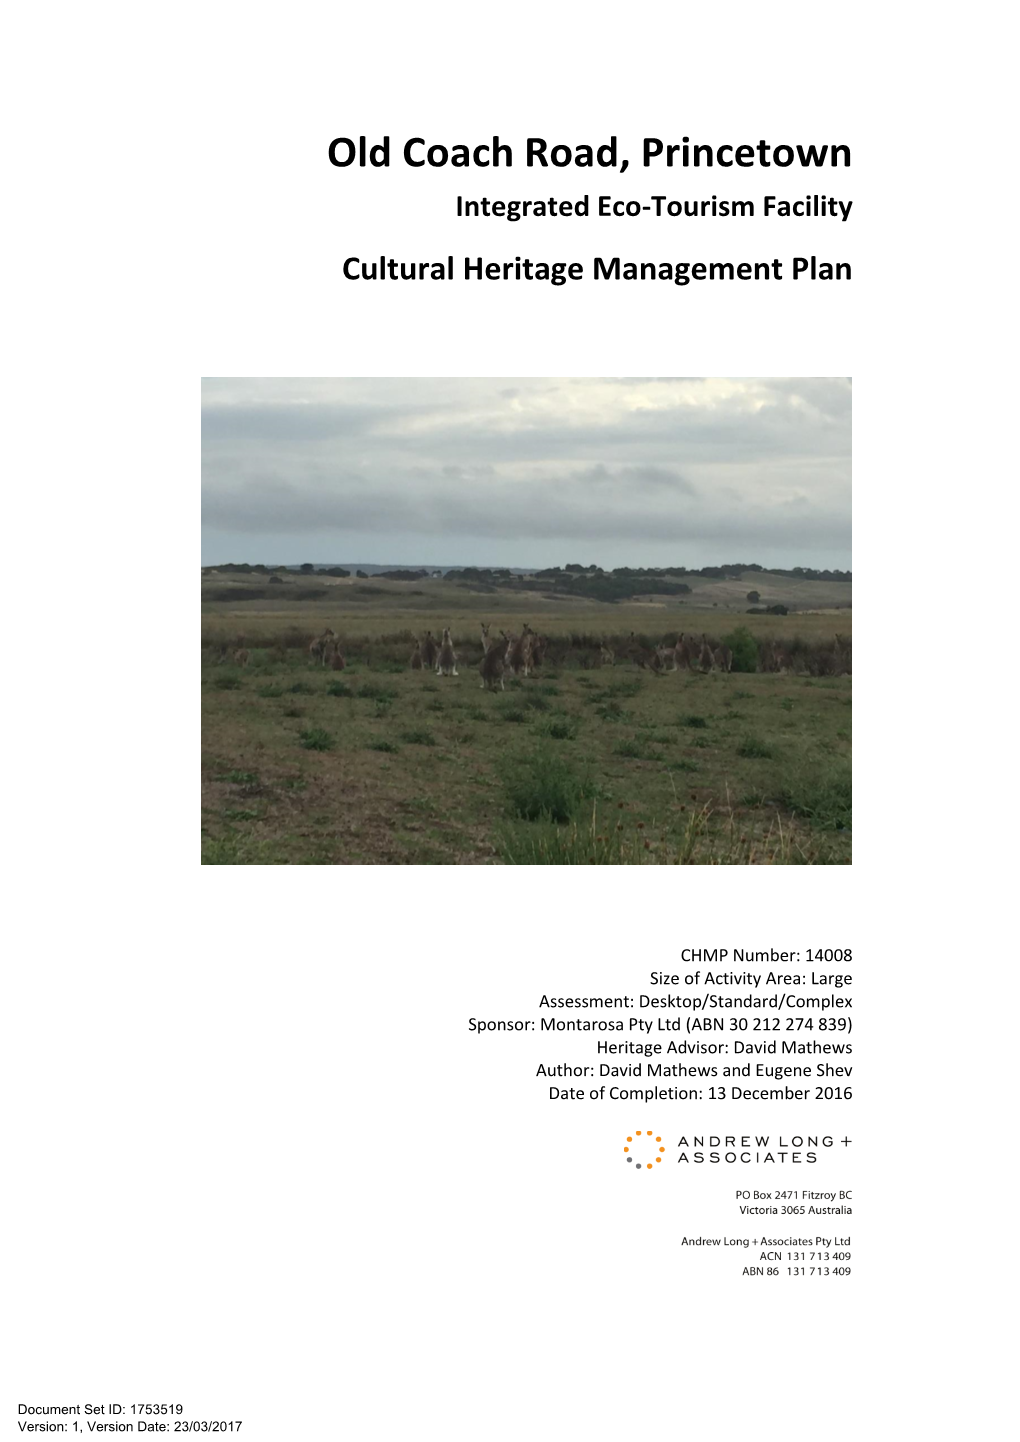 Cultural Heritage Management Plan